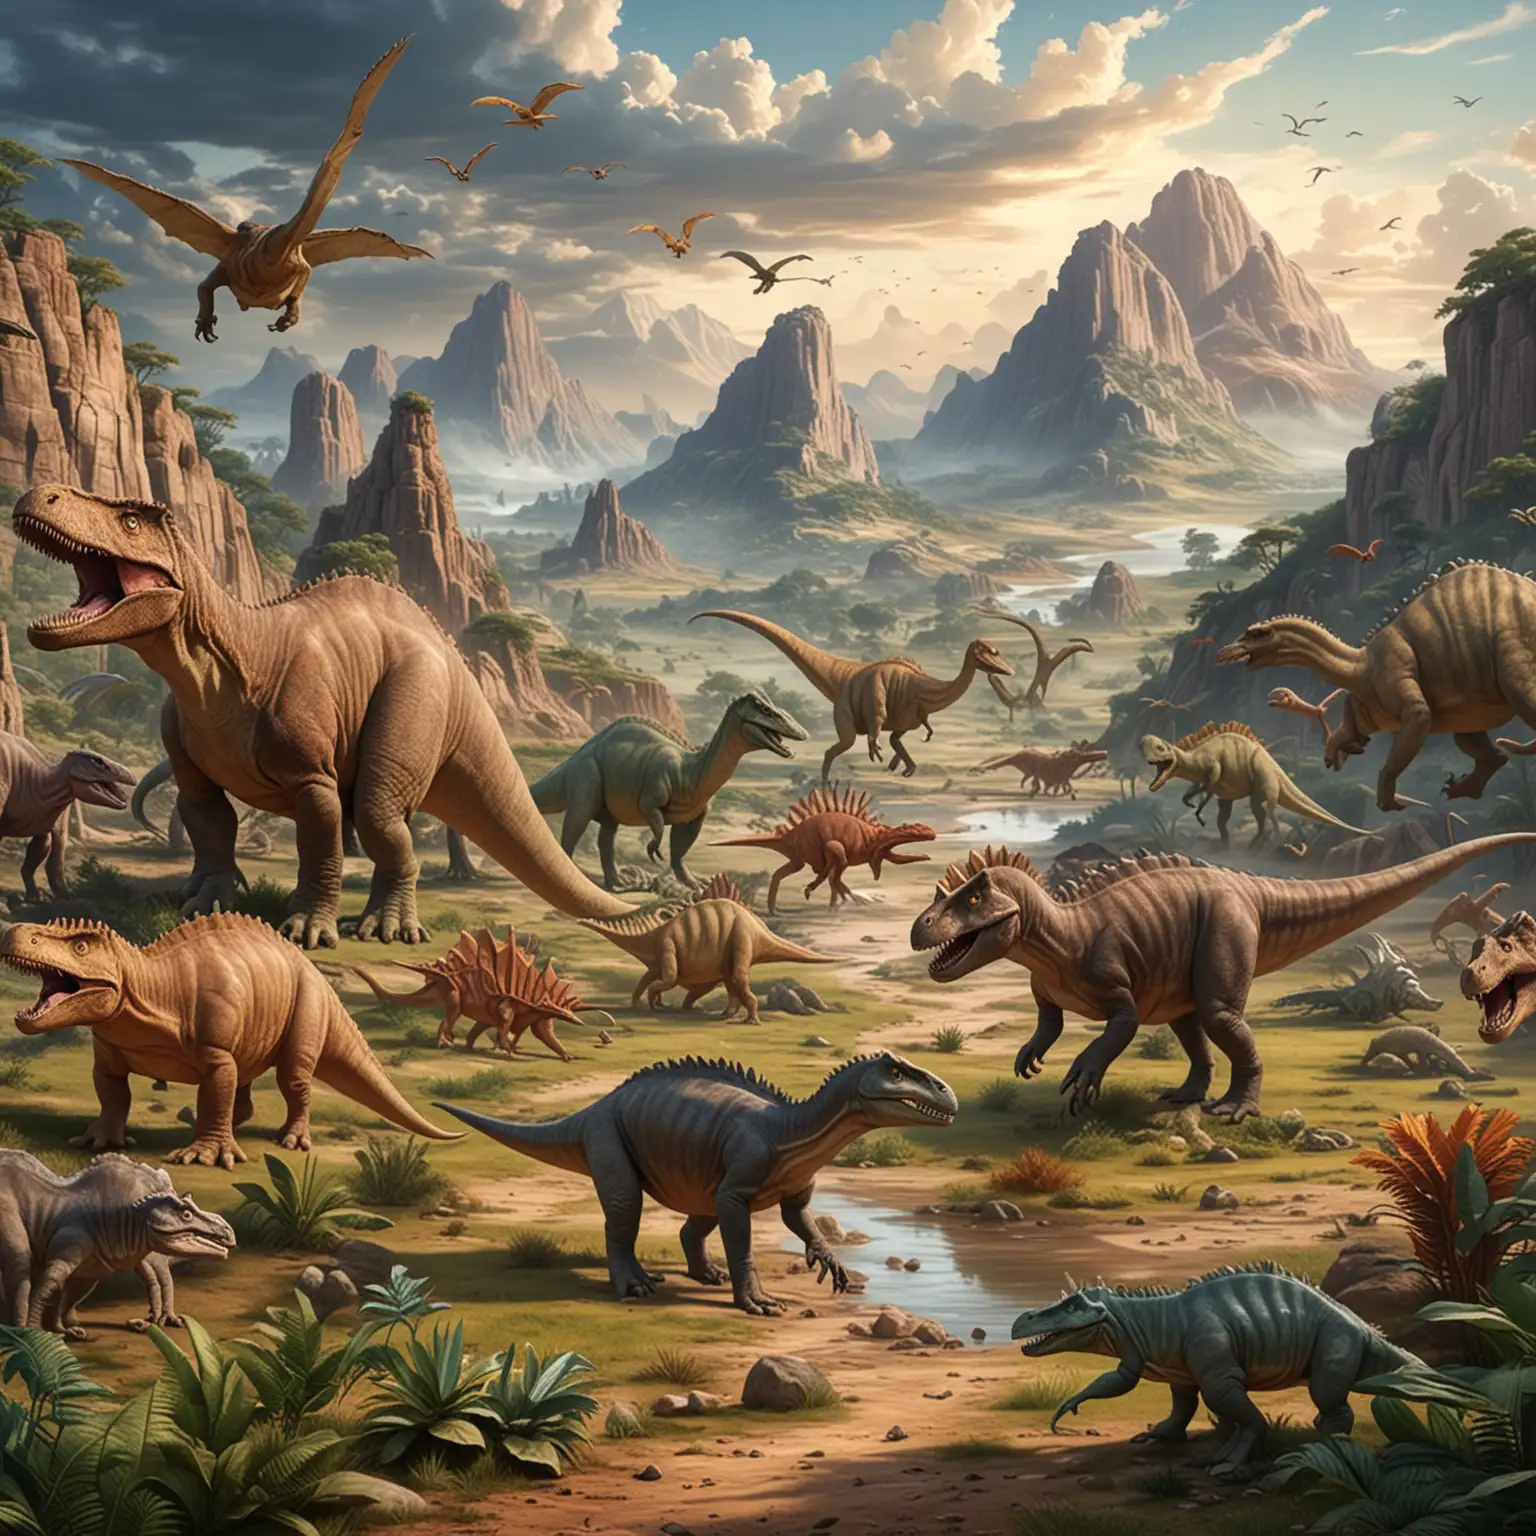 Diverse Dinosaurs Roaming the Prehistoric Wilderness